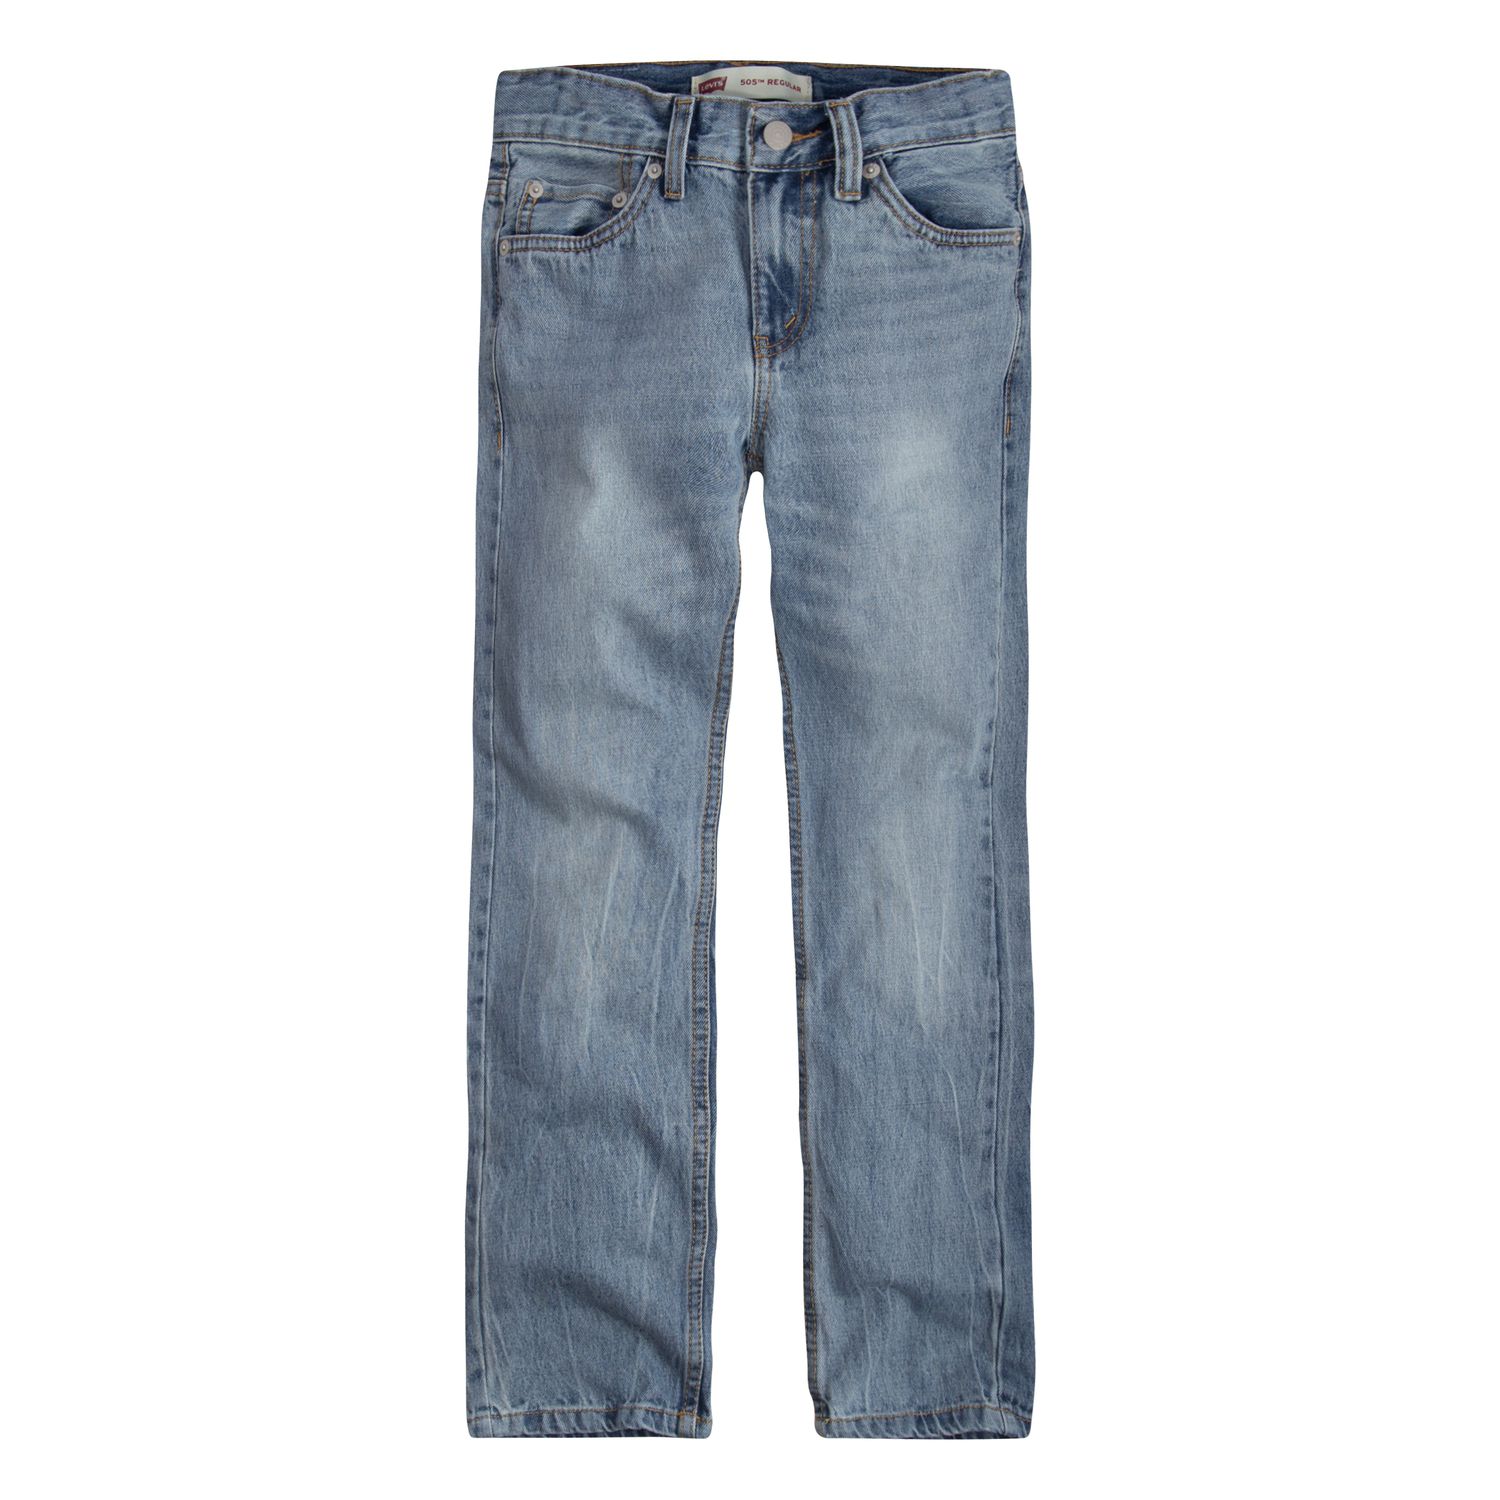 levis 505 husky jeans